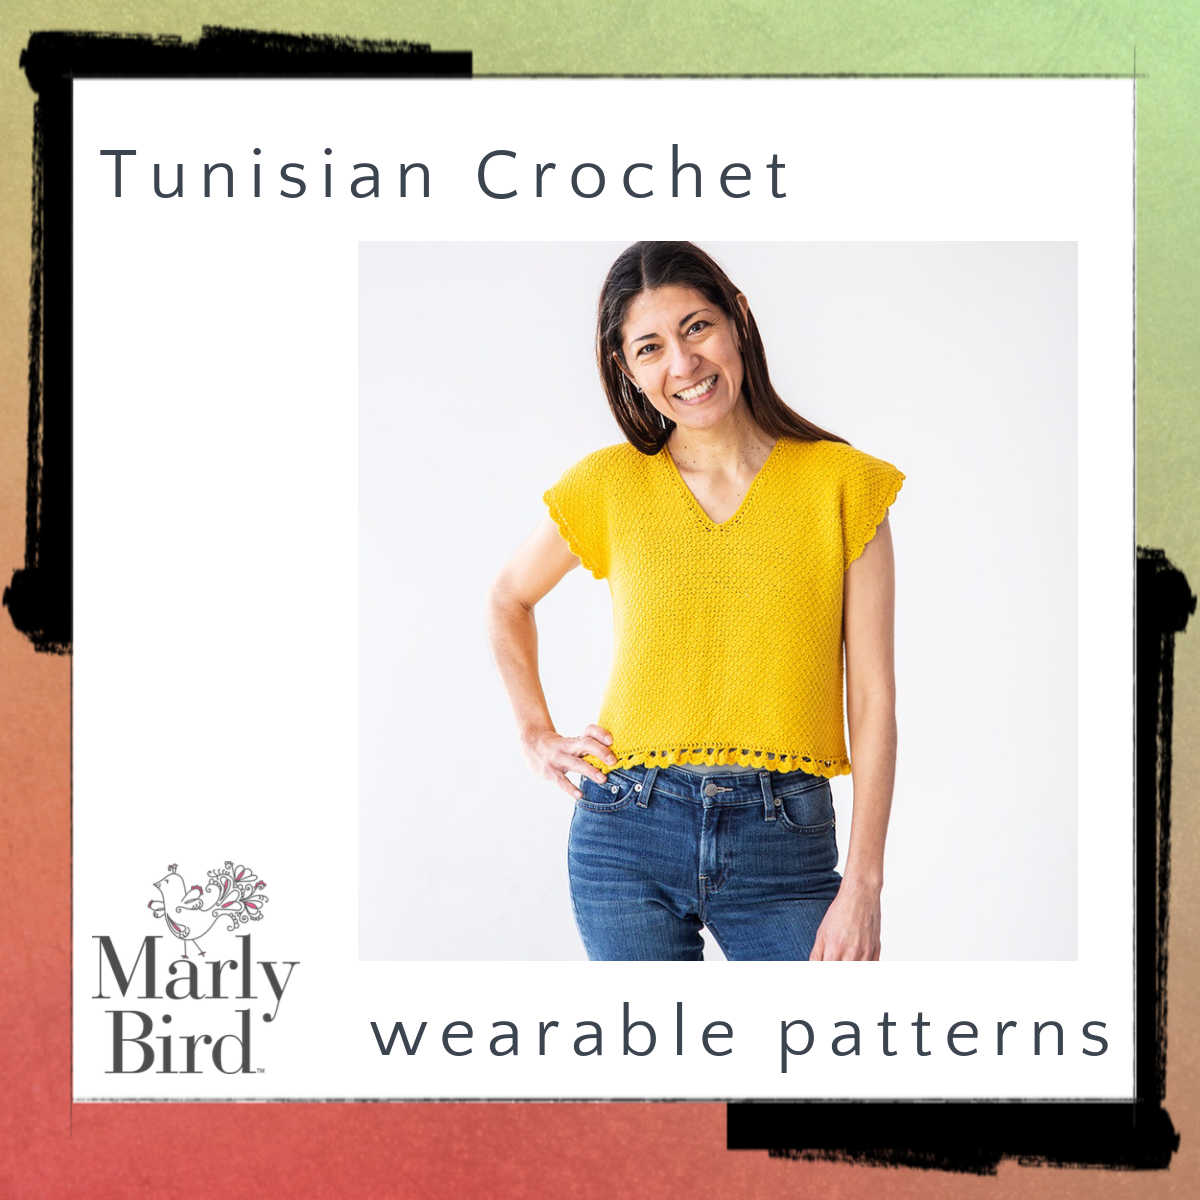 Tunisian crochet patterns - Marly Bird